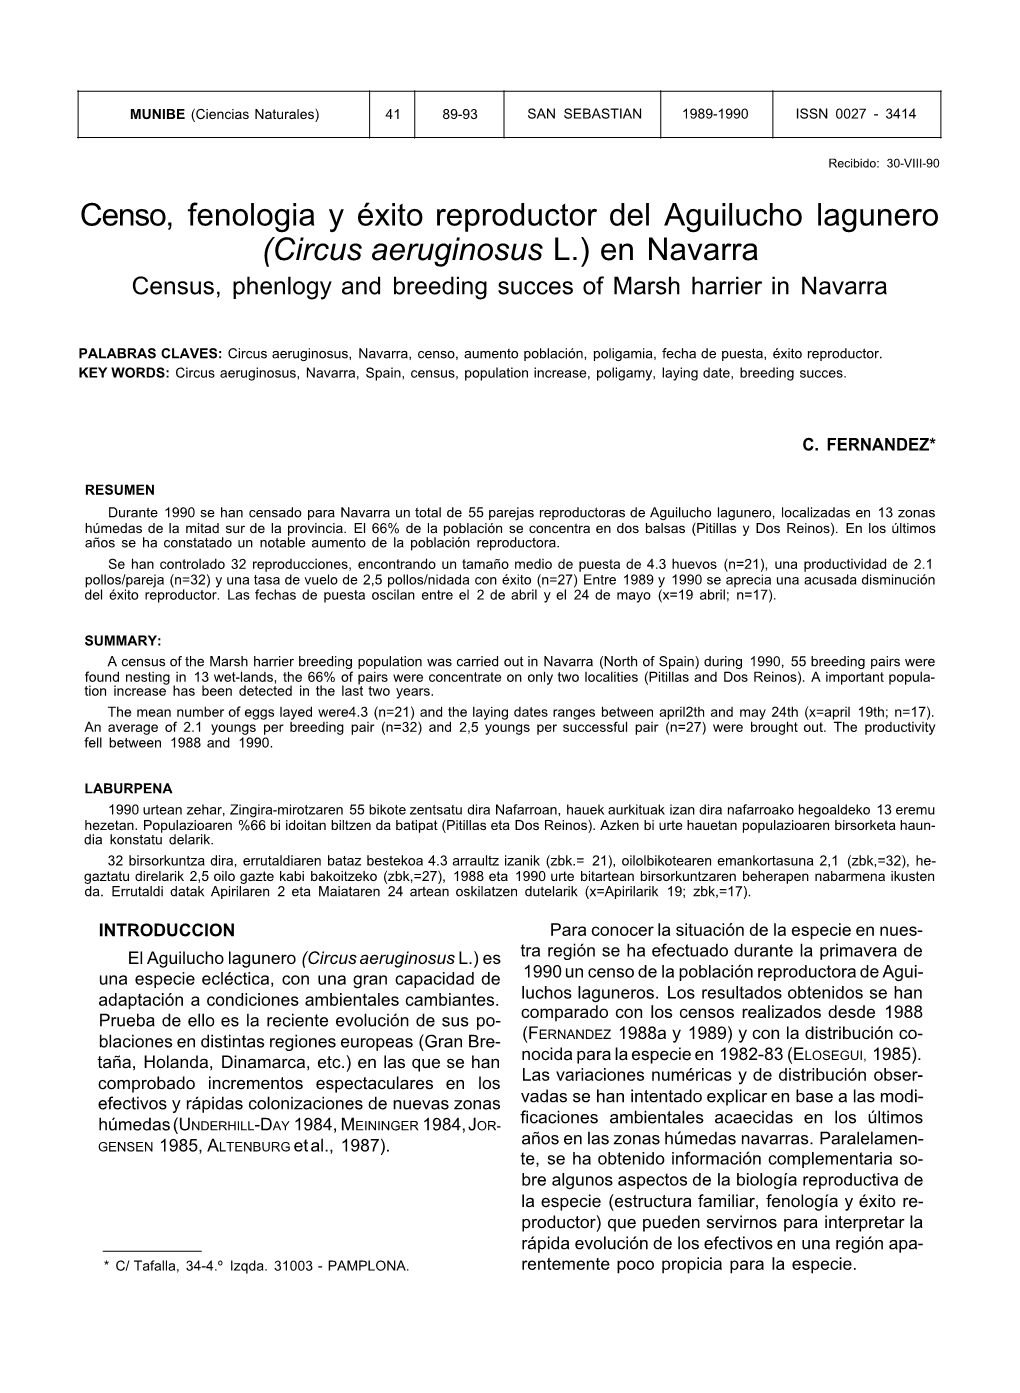 Circus Aeruginosus L.) En Navarra Census, Phenlogy and Breeding Succes of Marsh Harrier in Navarra